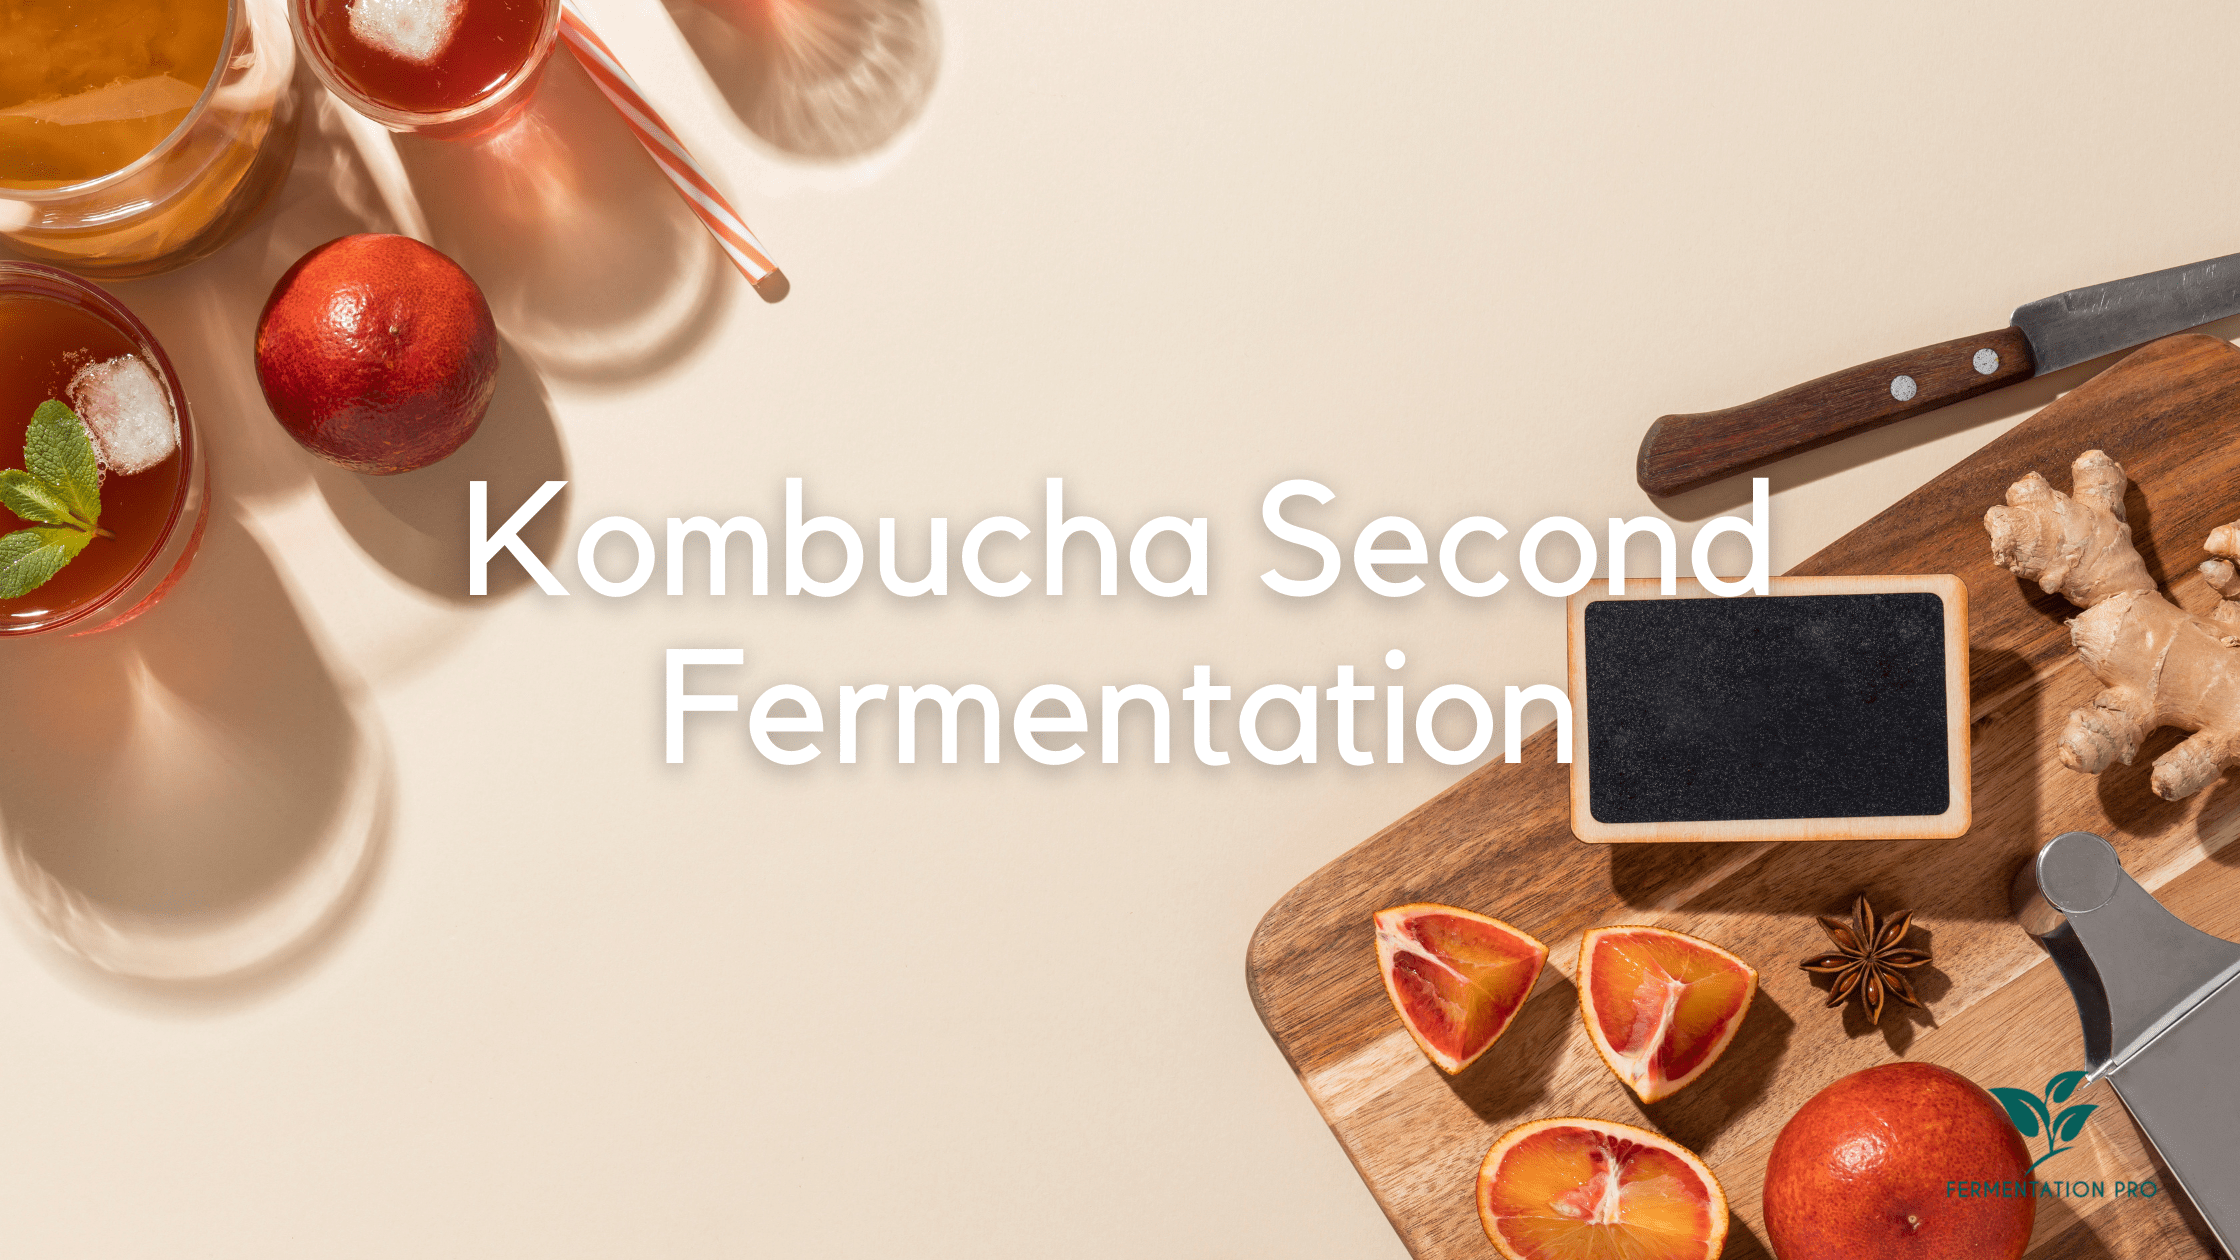 Otilia Hd Porn Video - Kombucha Second Fermentation - Fermentation Pro